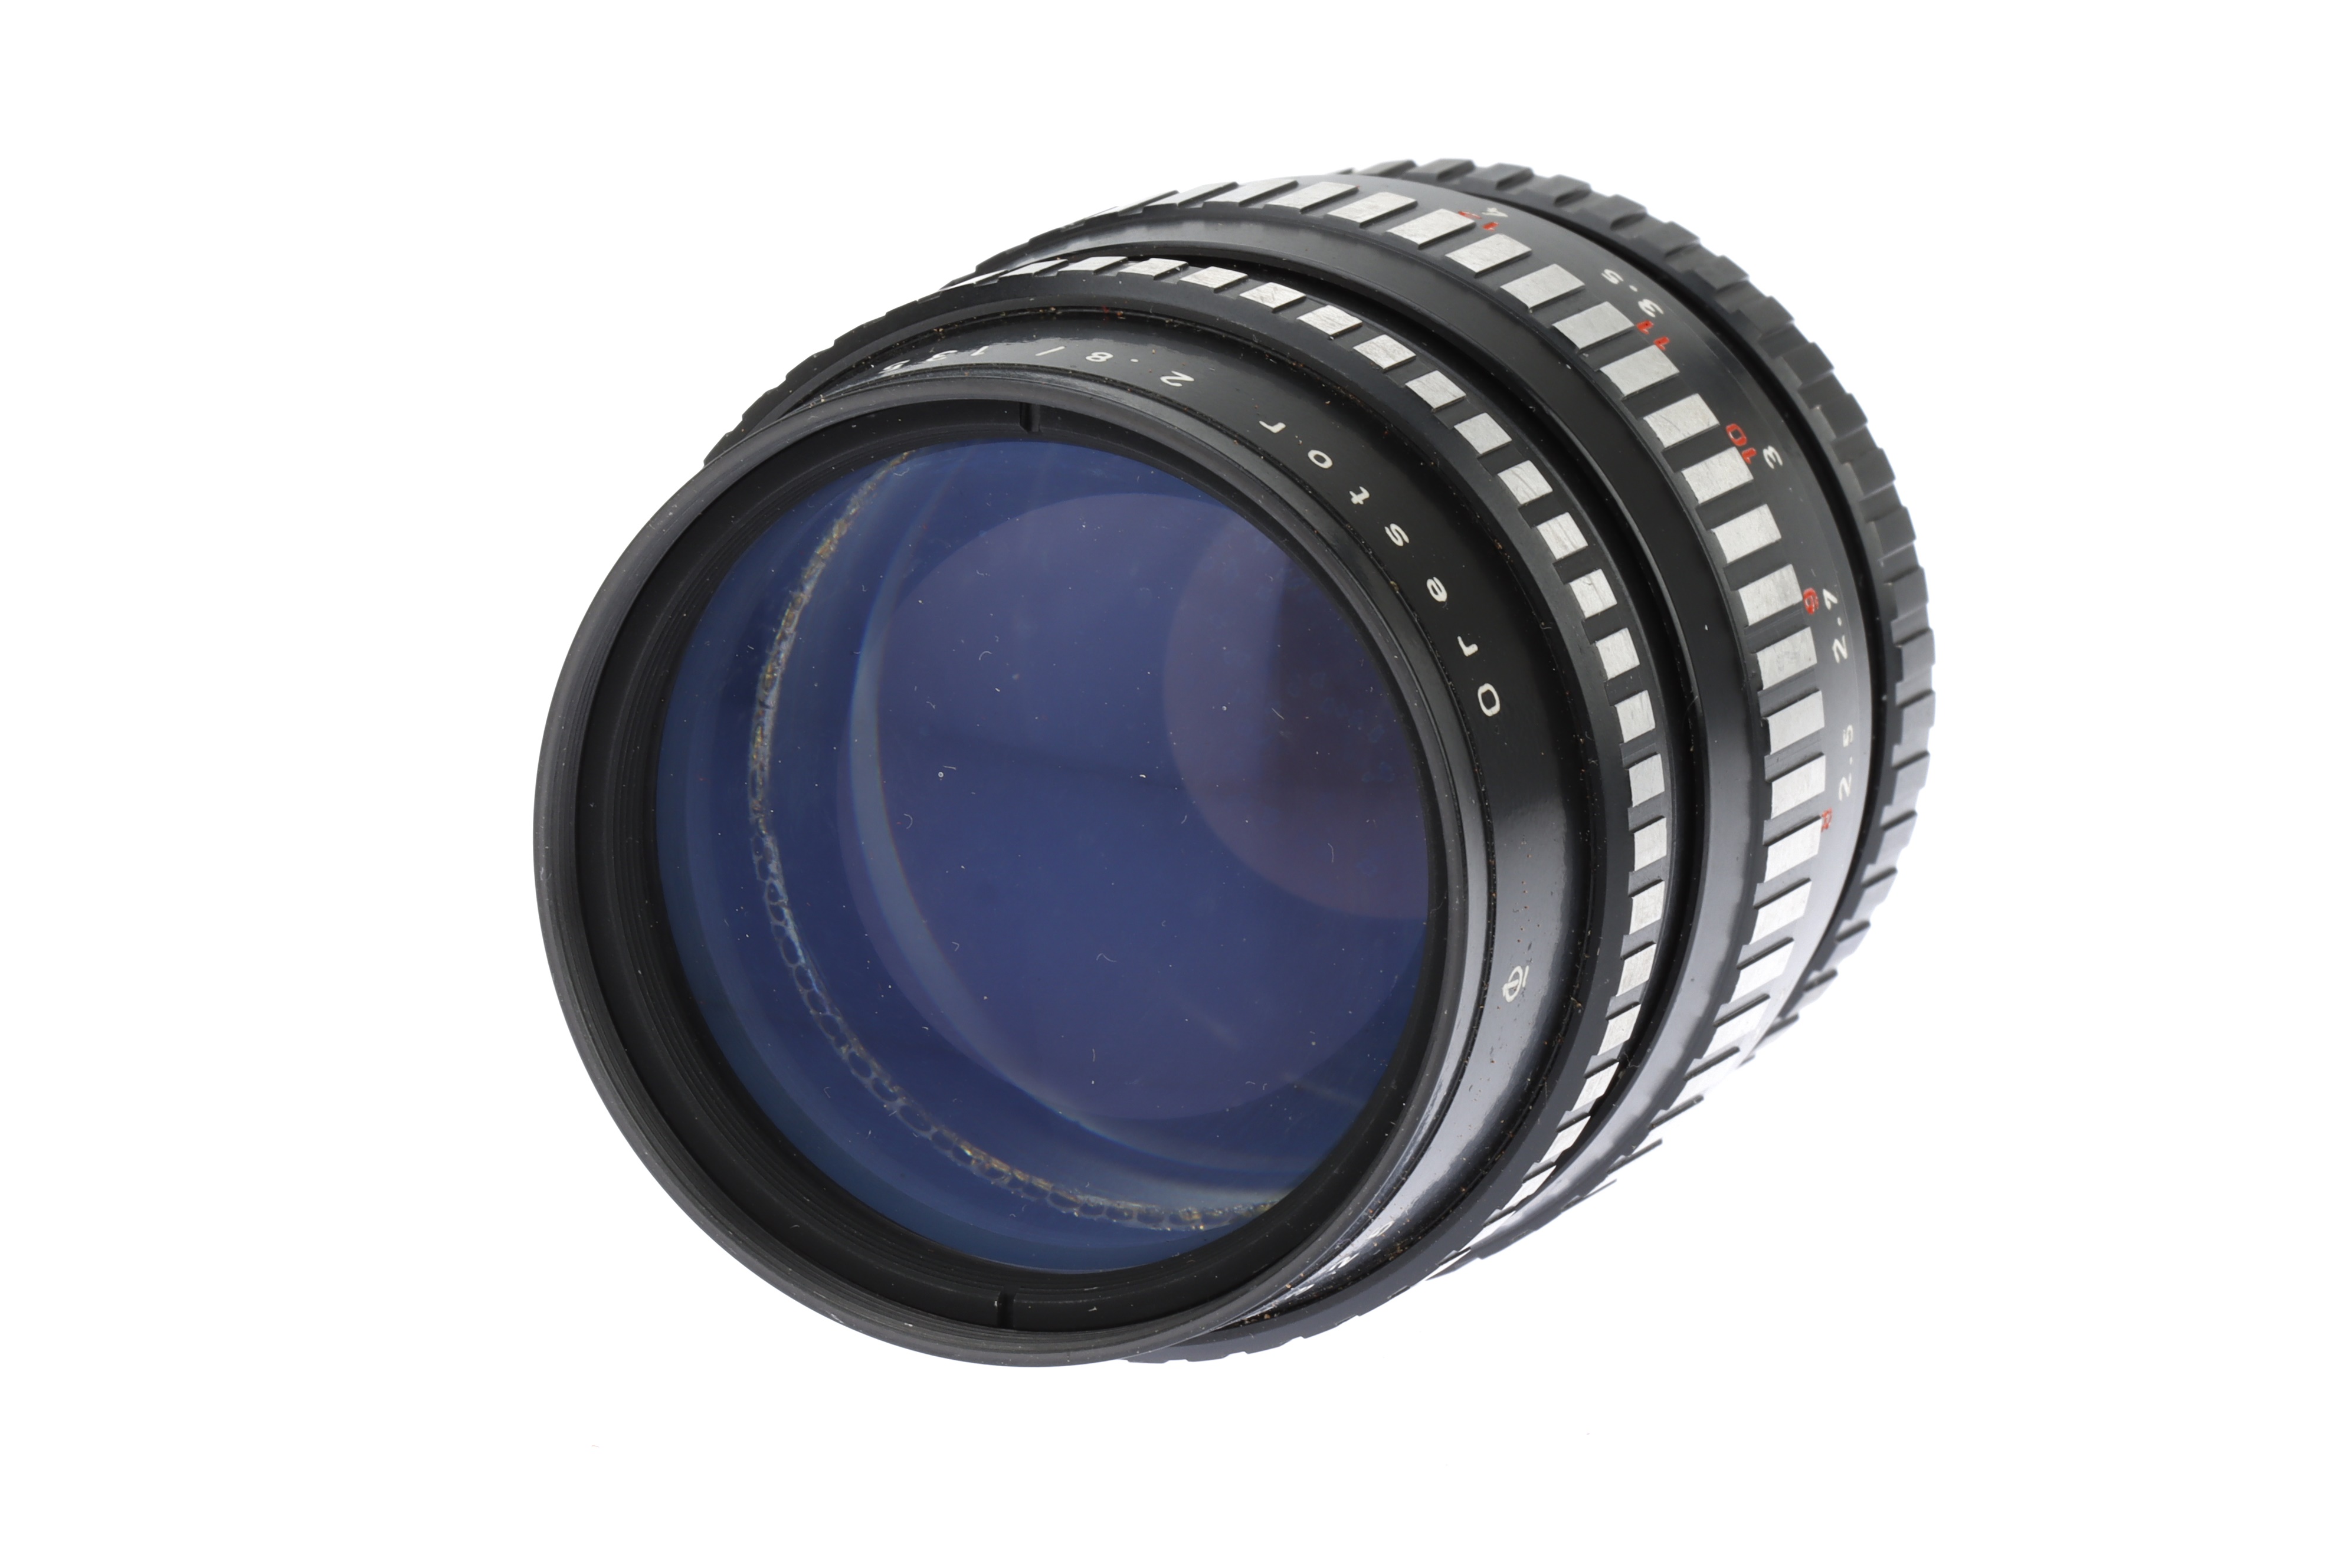 A Meyer-Optik Gorlitz Orestor f/2.8 135mm Preset Lens - Image 2 of 2